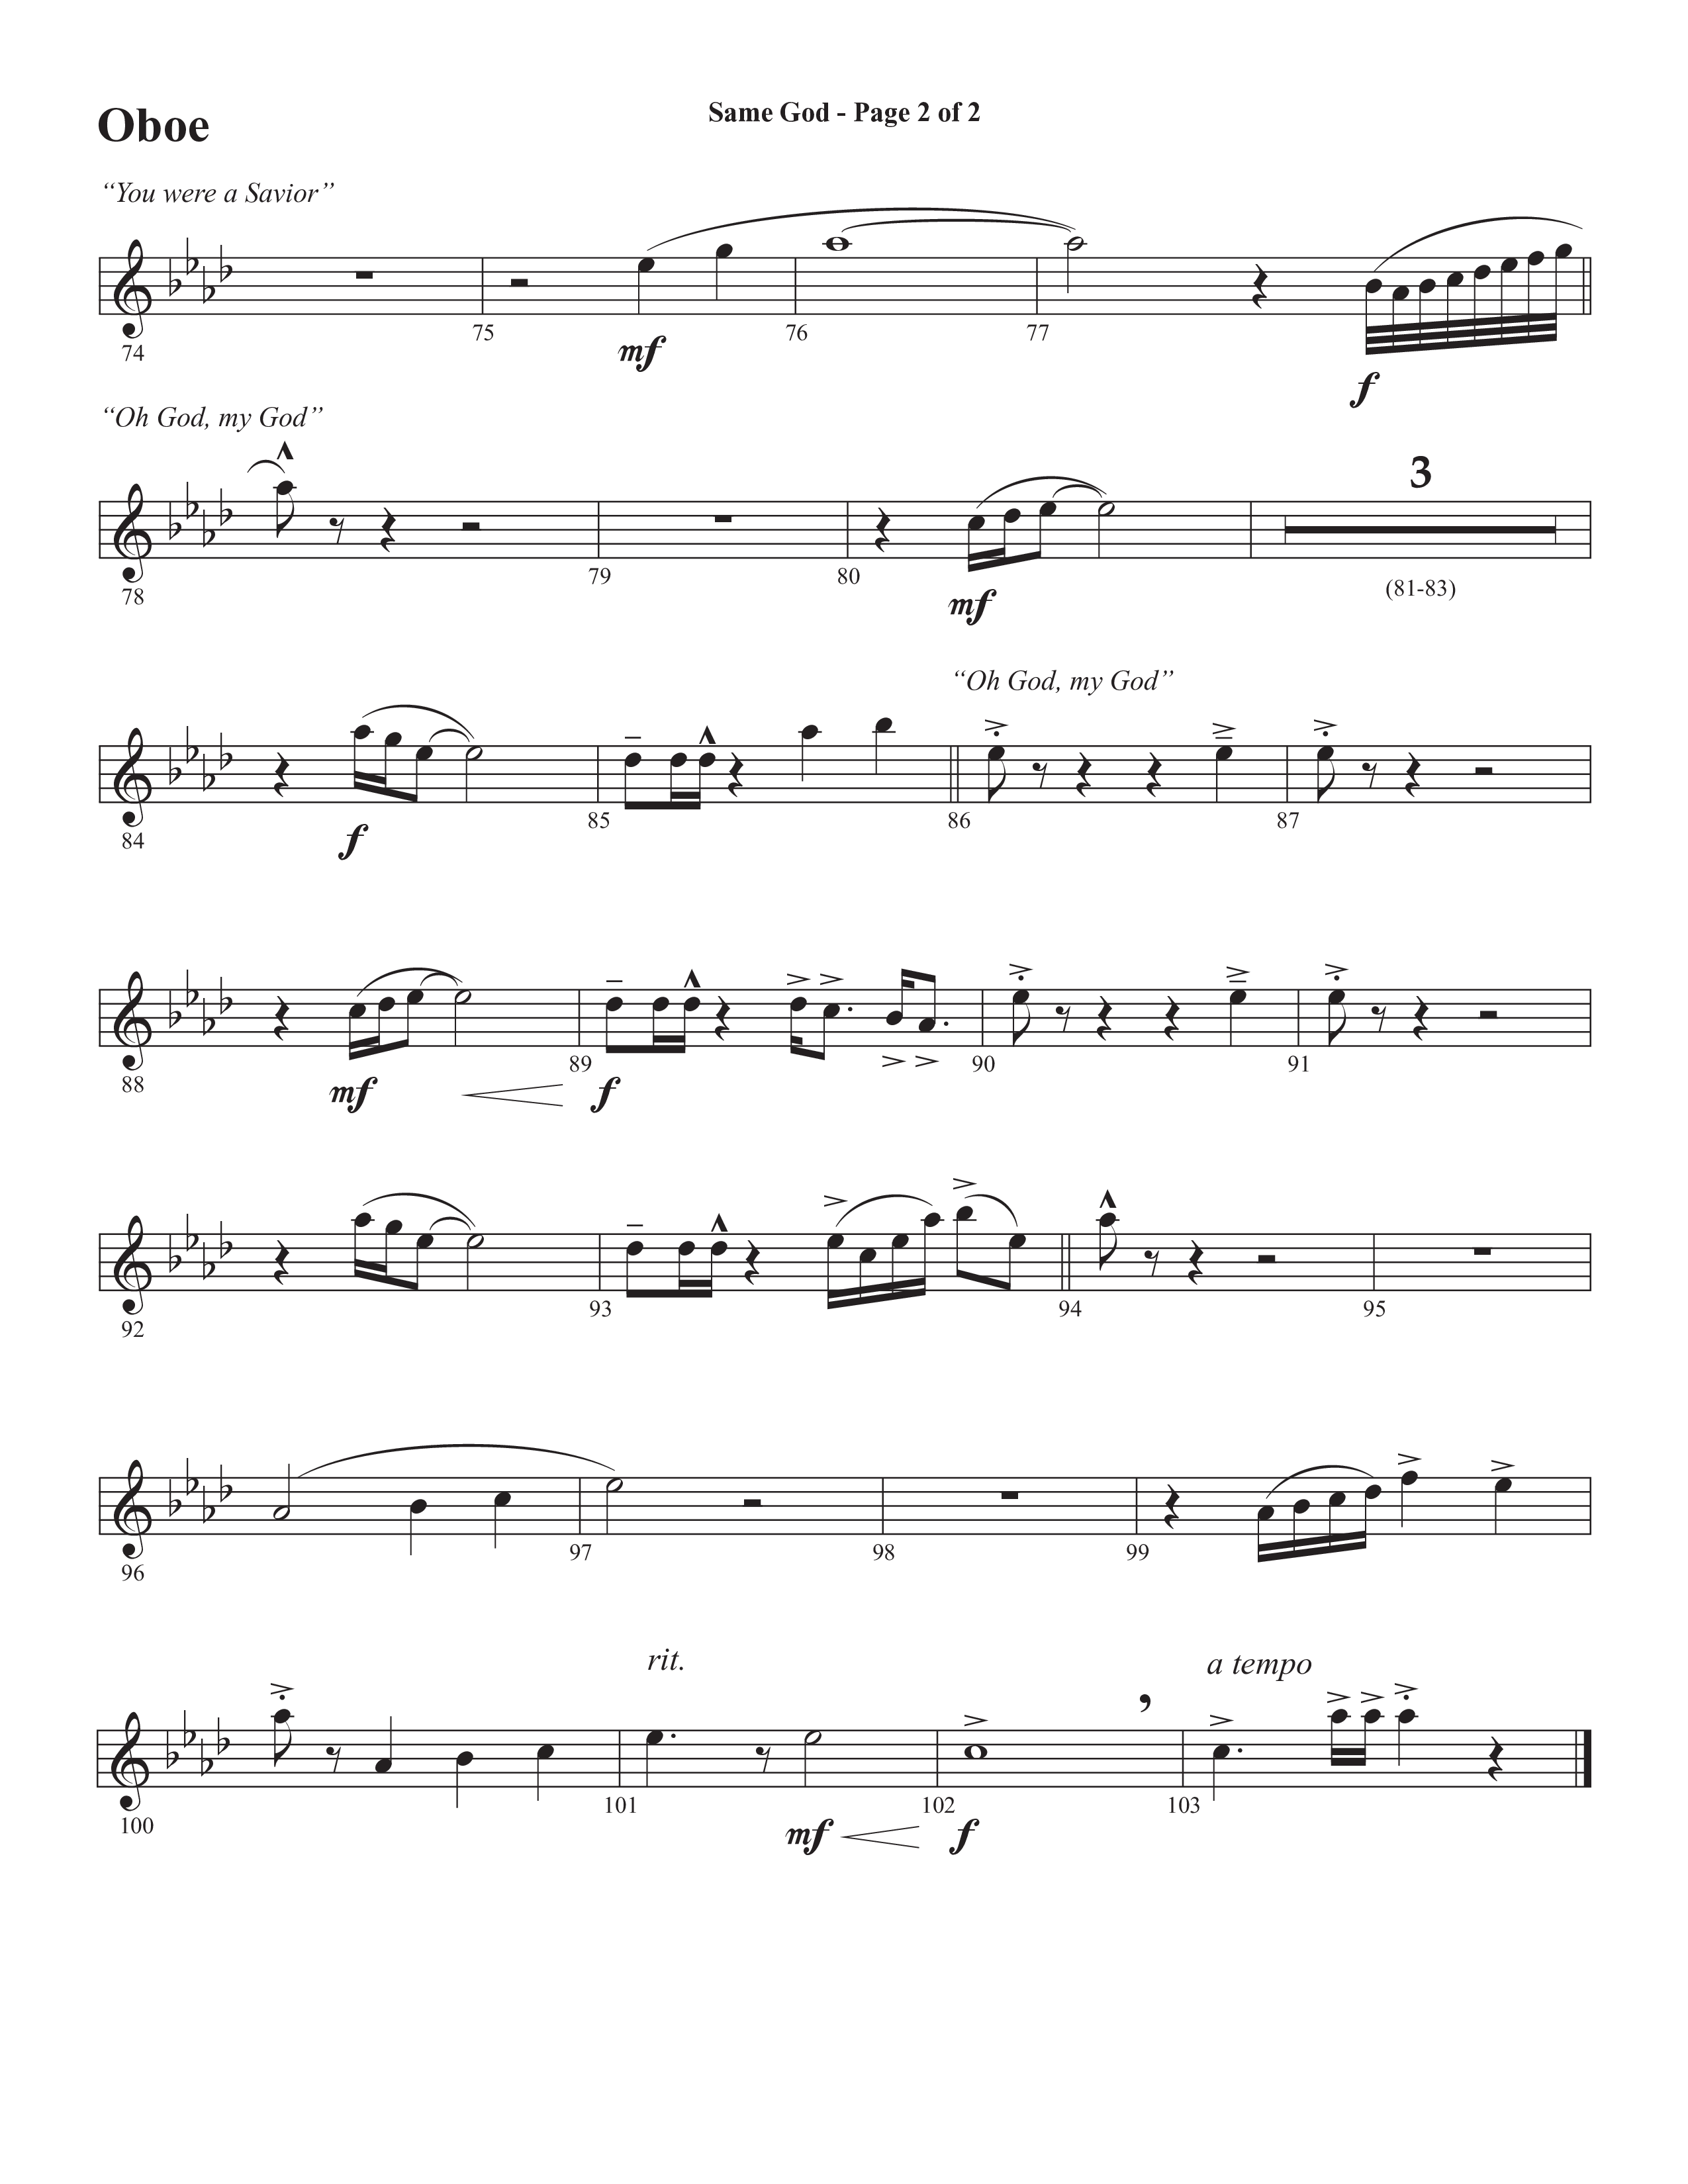 Same God (Choral Anthem SATB) Oboe (Semsen Music / Arr. Phil Nitz)